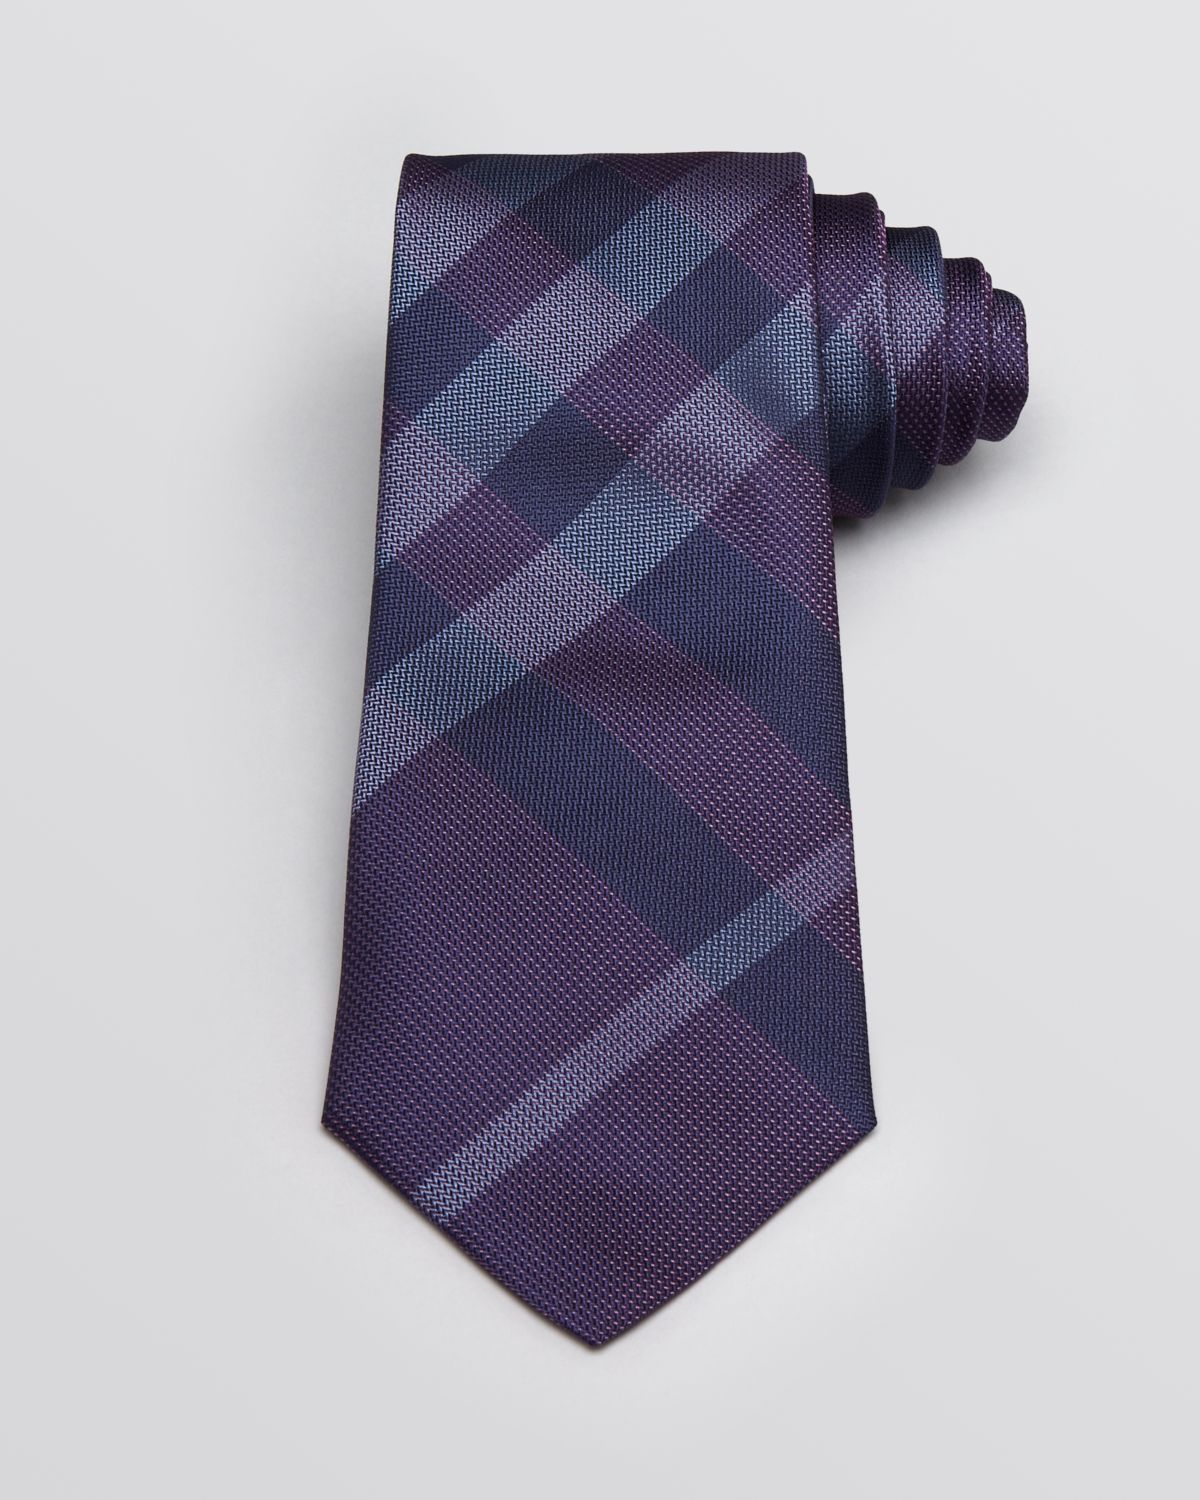 Burberry London Regent Check Classic Tie in Purple for Men - Lyst